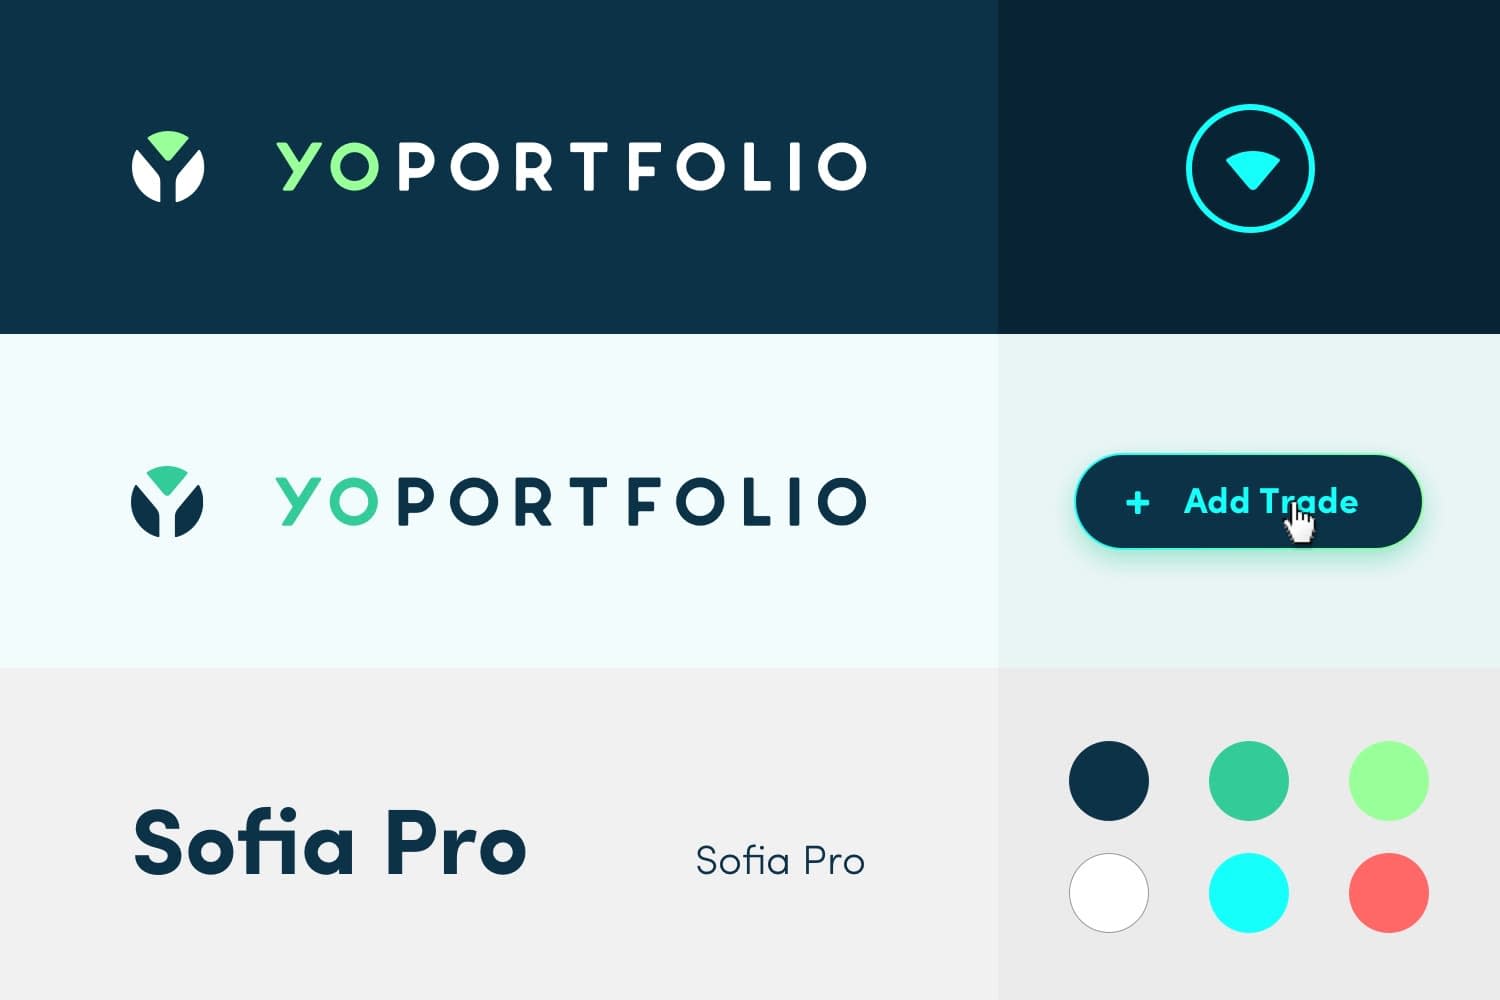 Yo Portfolio brand elements